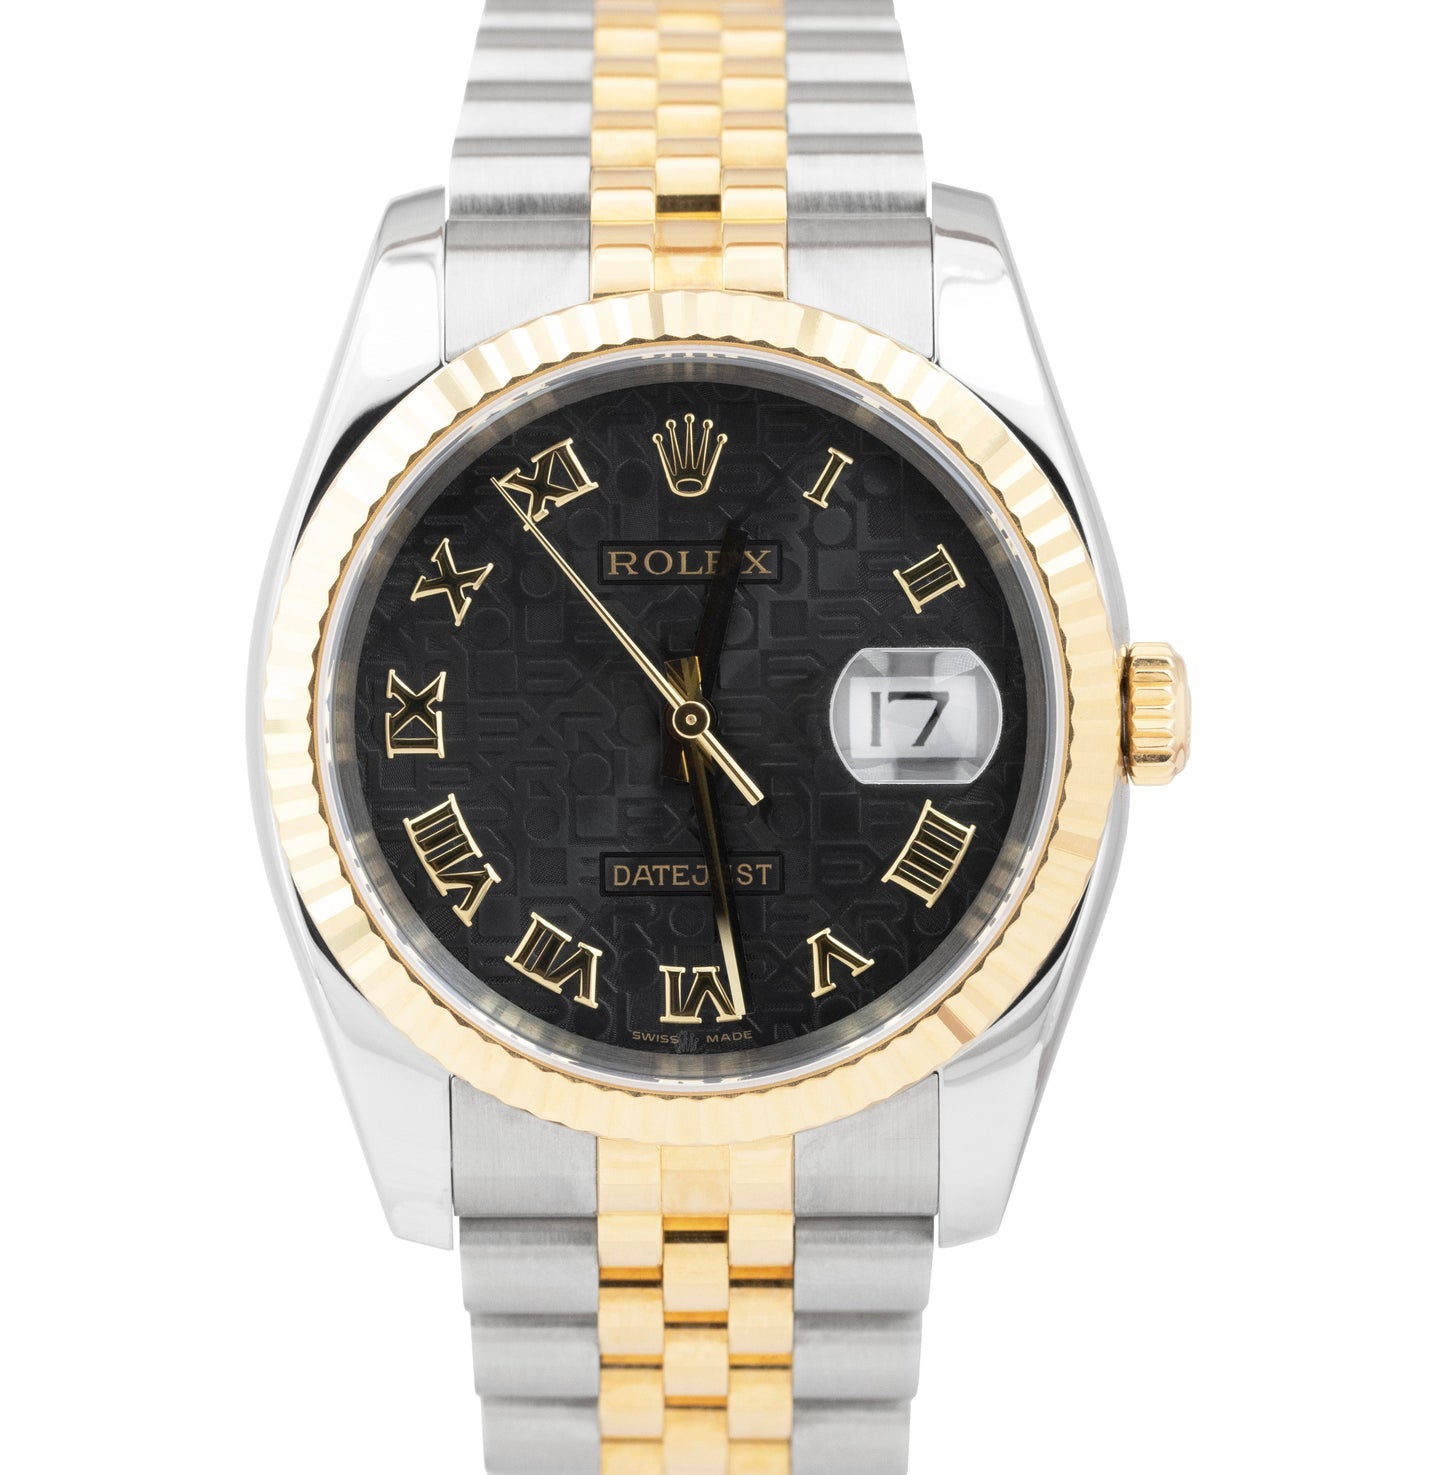 MINT Rolex DateJust 36mm 116233 Two-Tone 18K Gold Steel Black Computer Watch